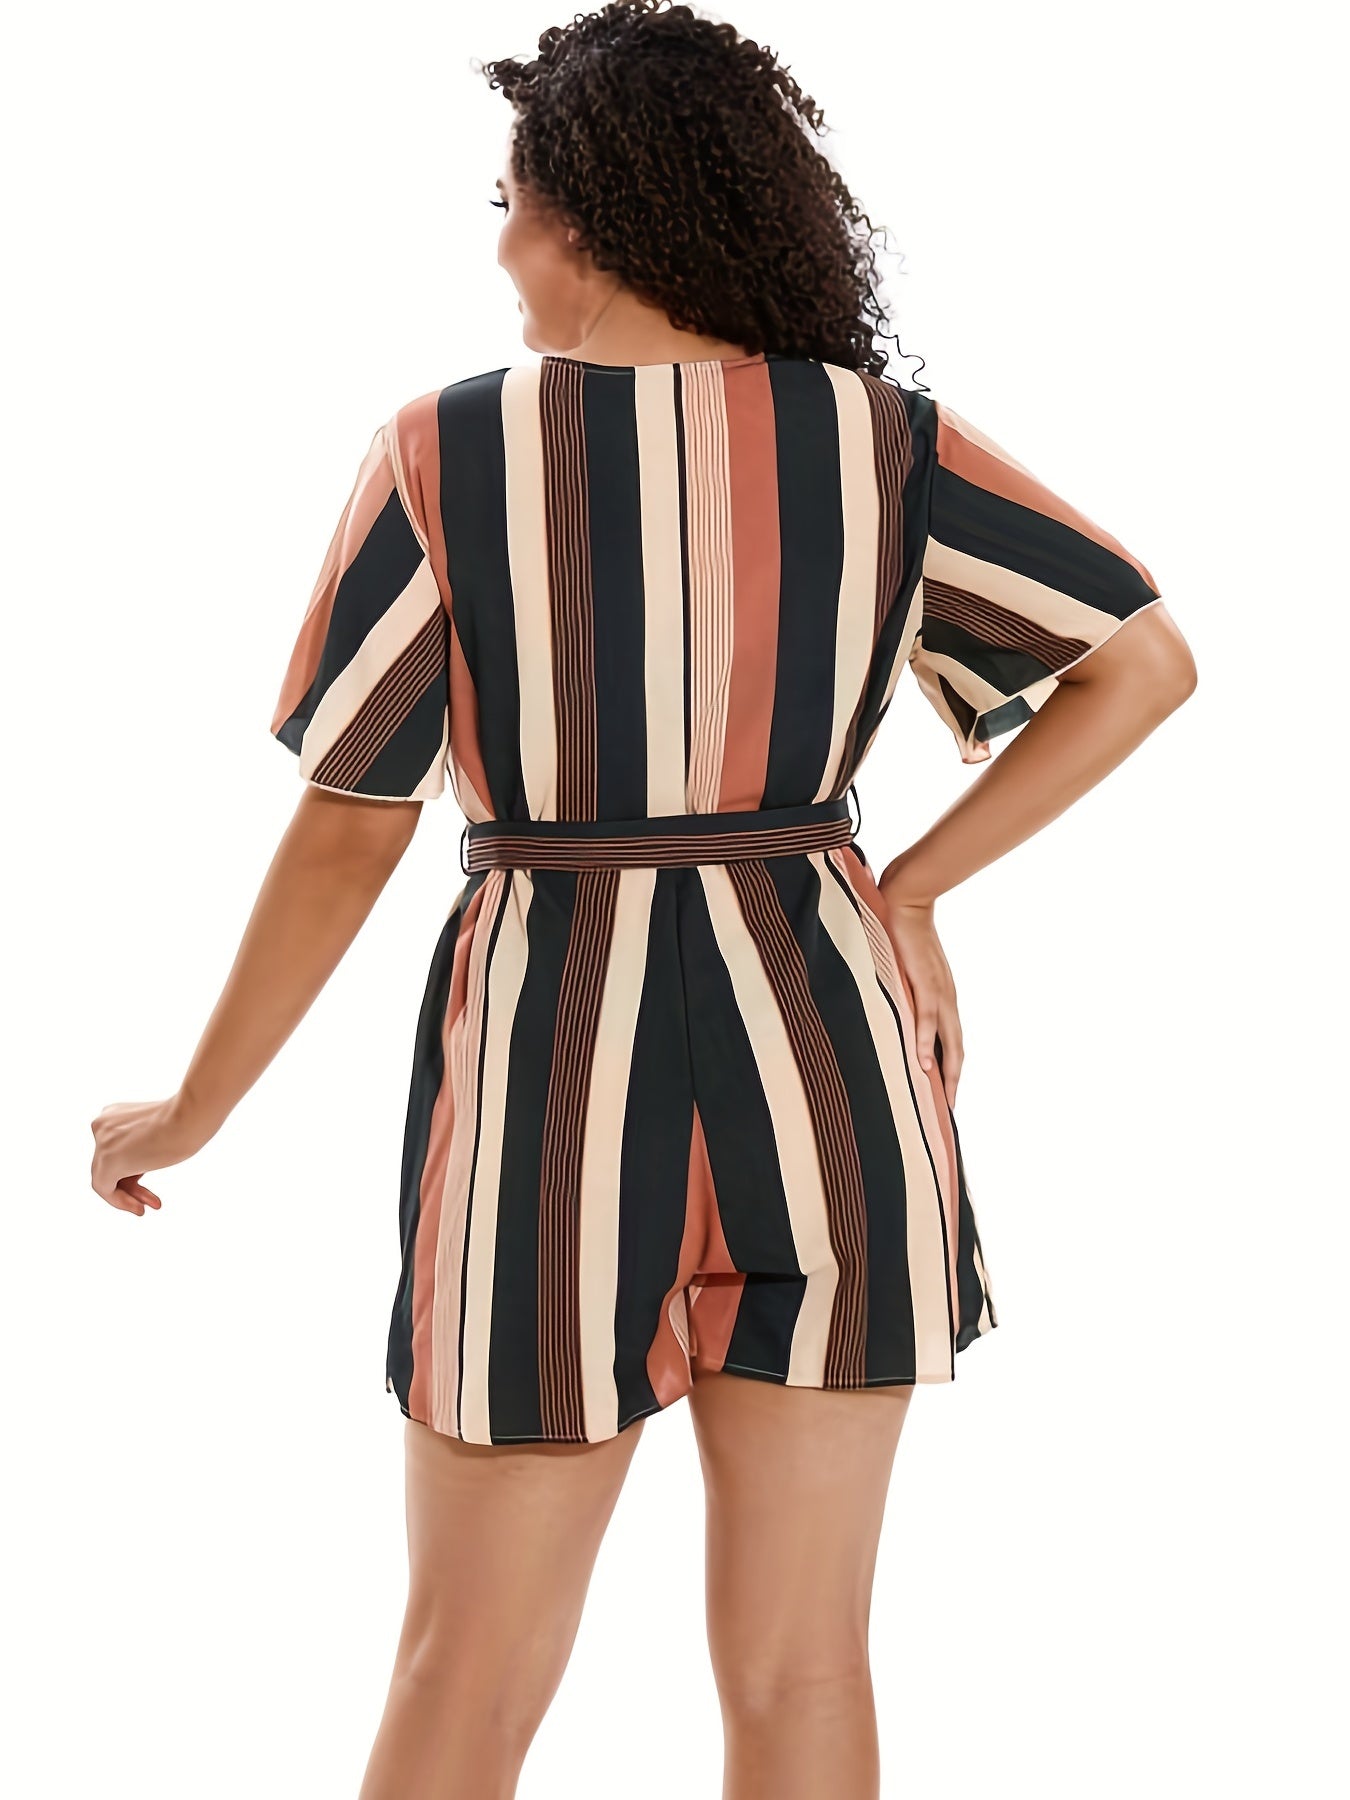 Plus Size Casual Romper, Women's Plus Stripe Print Short Sleeve Round Neck Romper With Belt